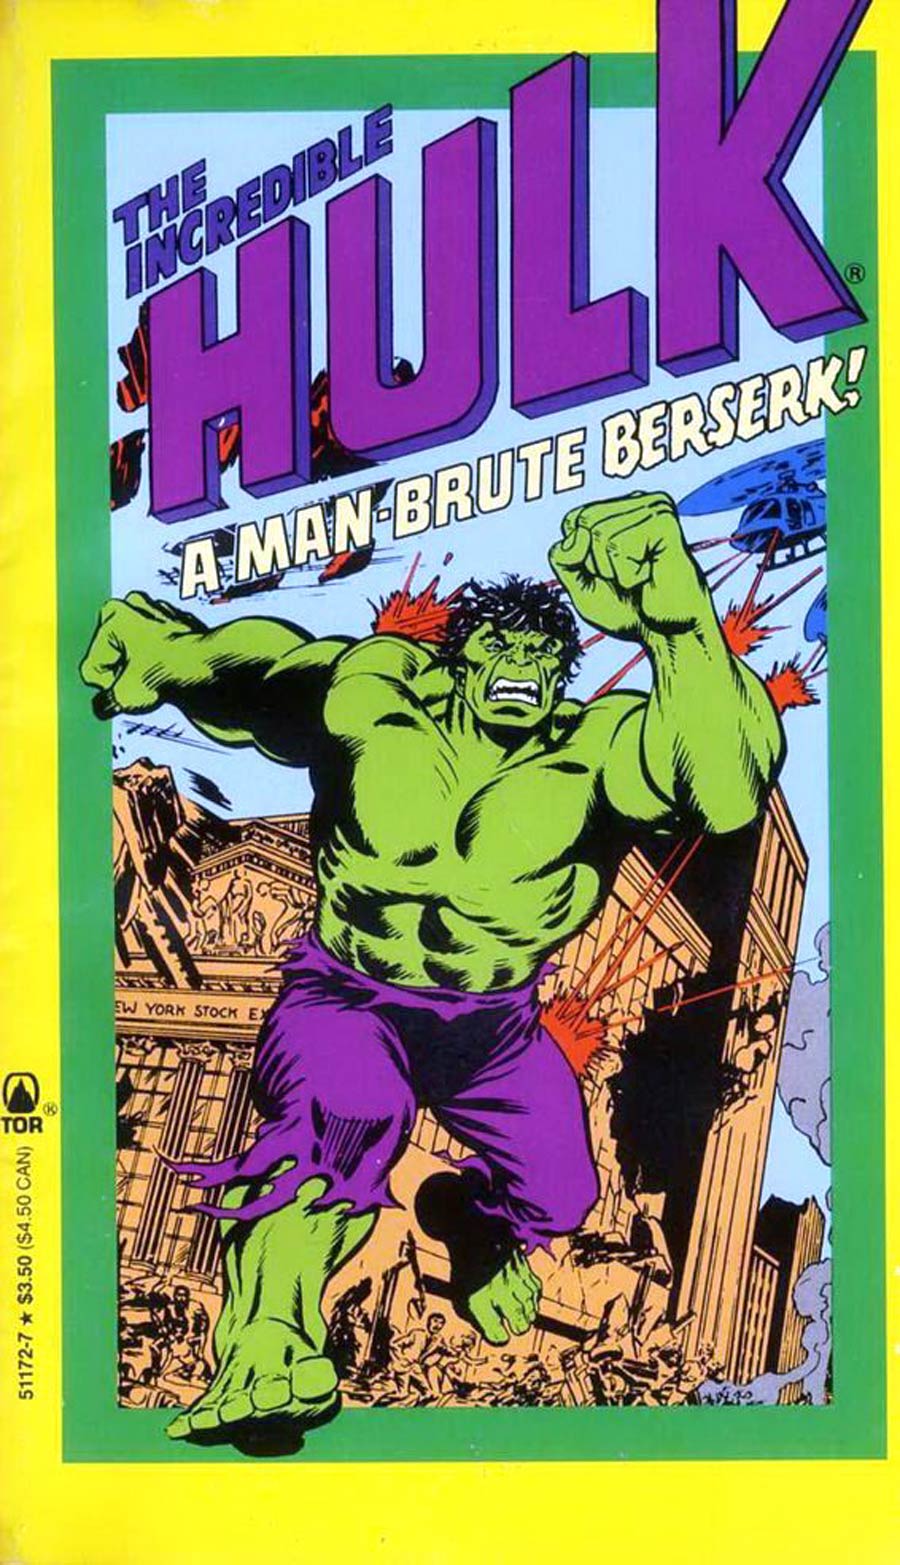 Incredible Hulk A Man-Brute Berserk Pocket Book